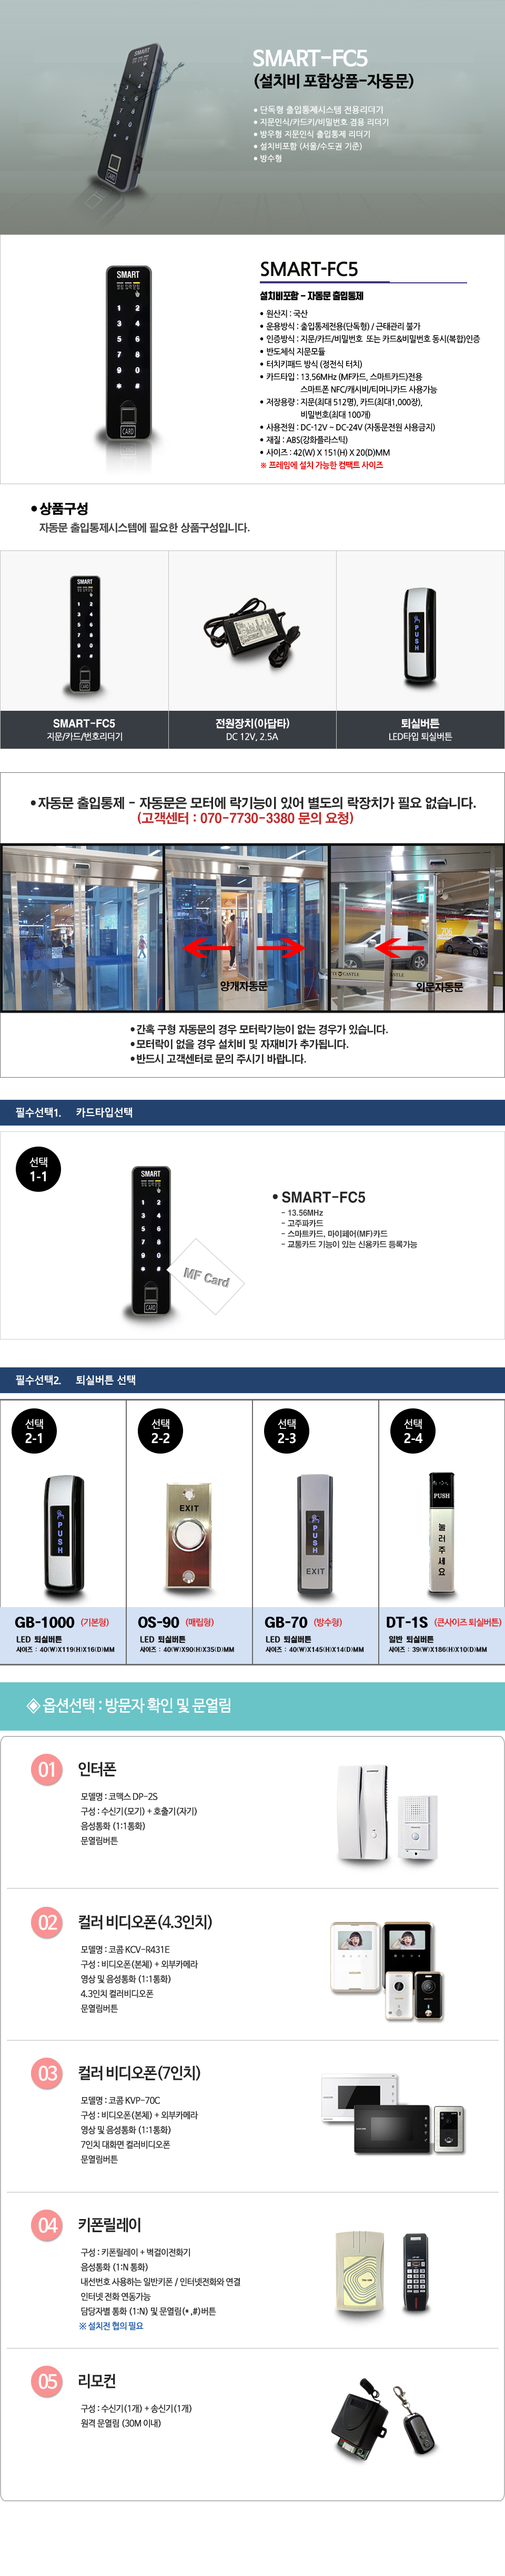 SMART-FC5설치비포함작업-자동문.jpg